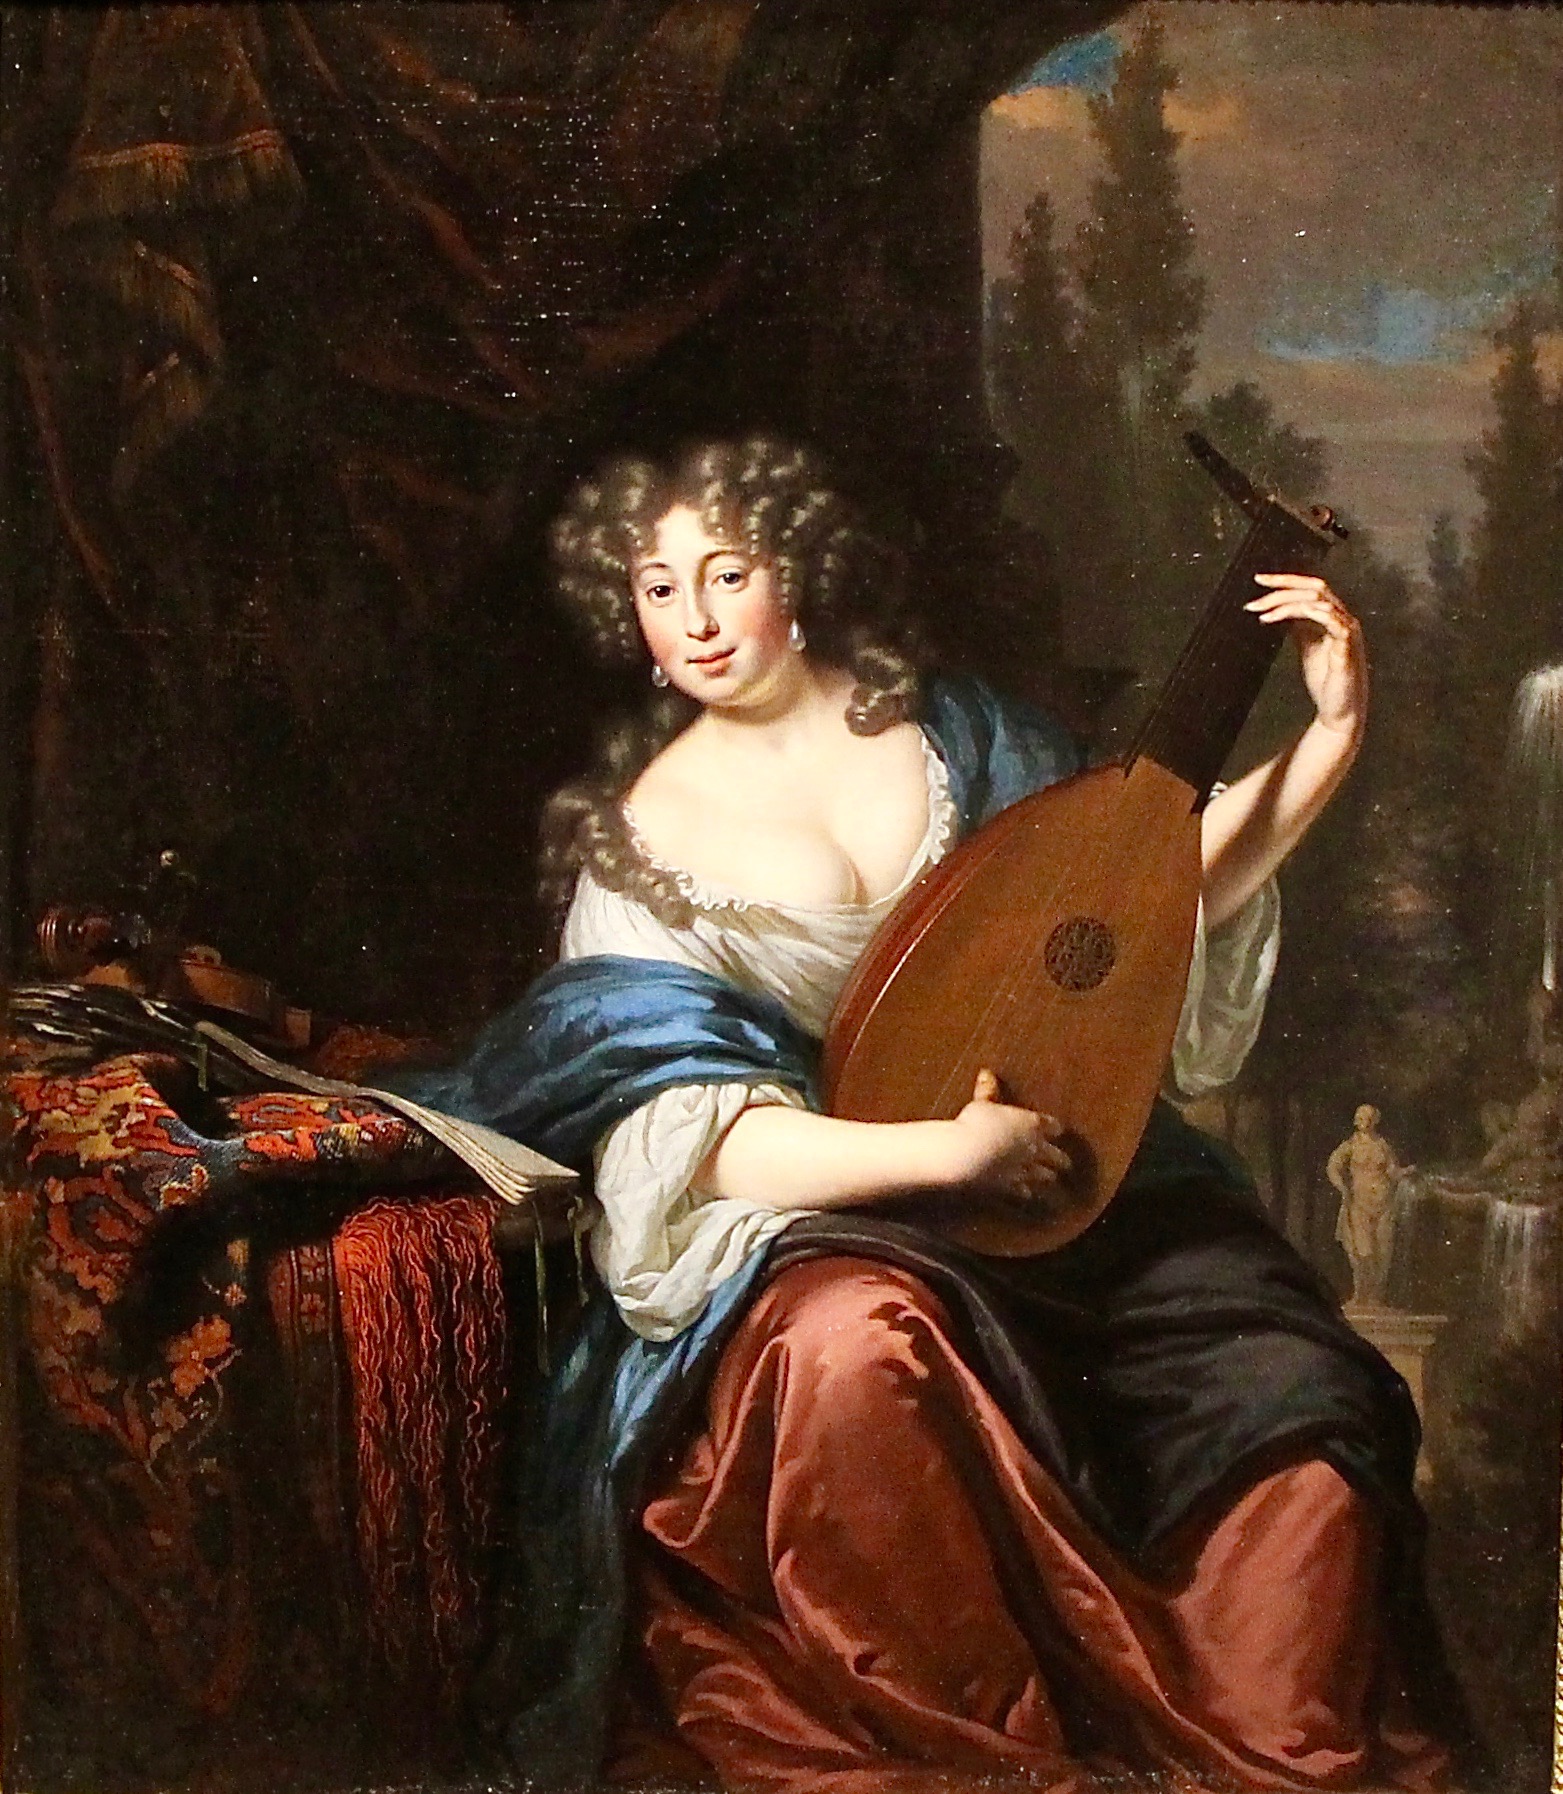 Michiel_van_Musscher,_Portrait_of_a_Lady_Playing_a_Lute_(1680)